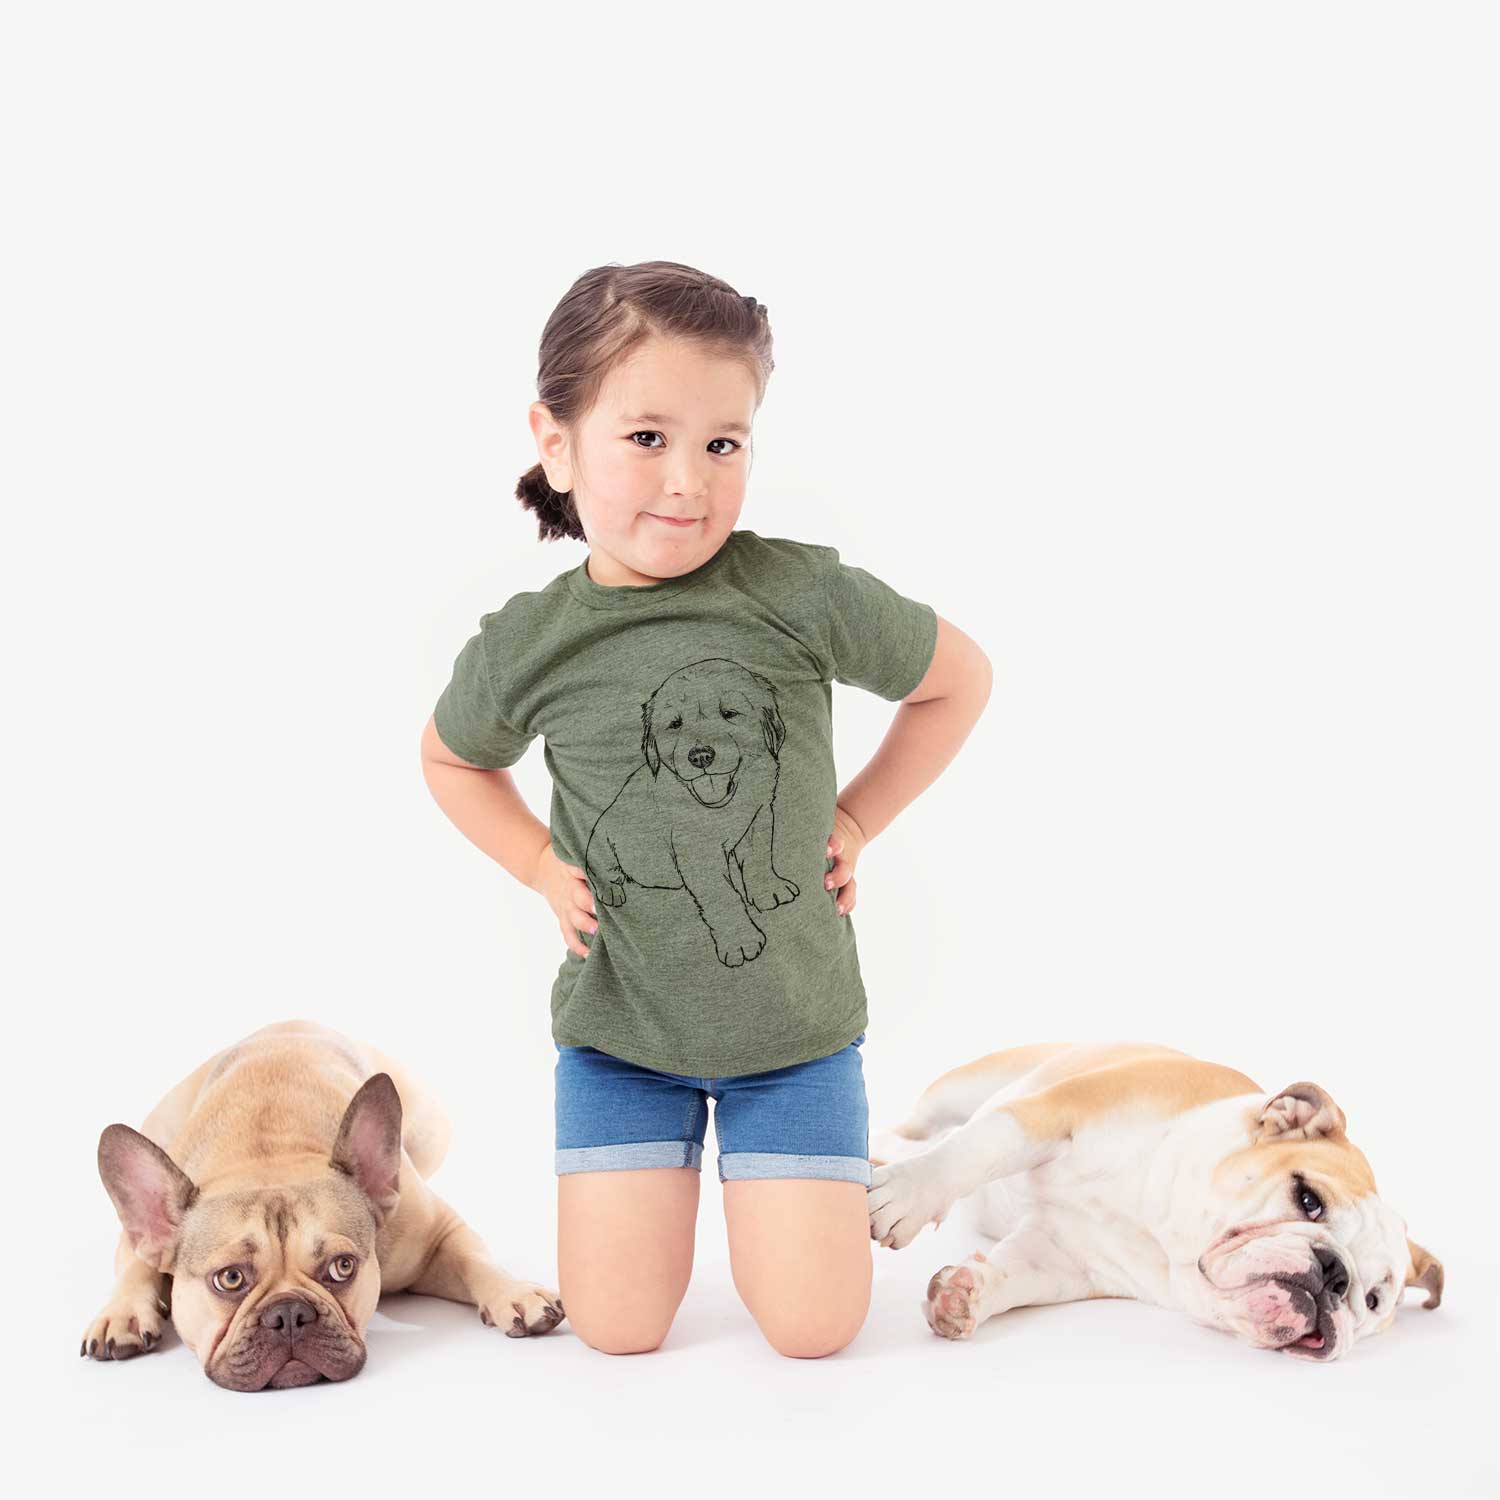 Doodled Loganator the Golden Retriever Puppy - Kids/Youth/Toddler Shirt